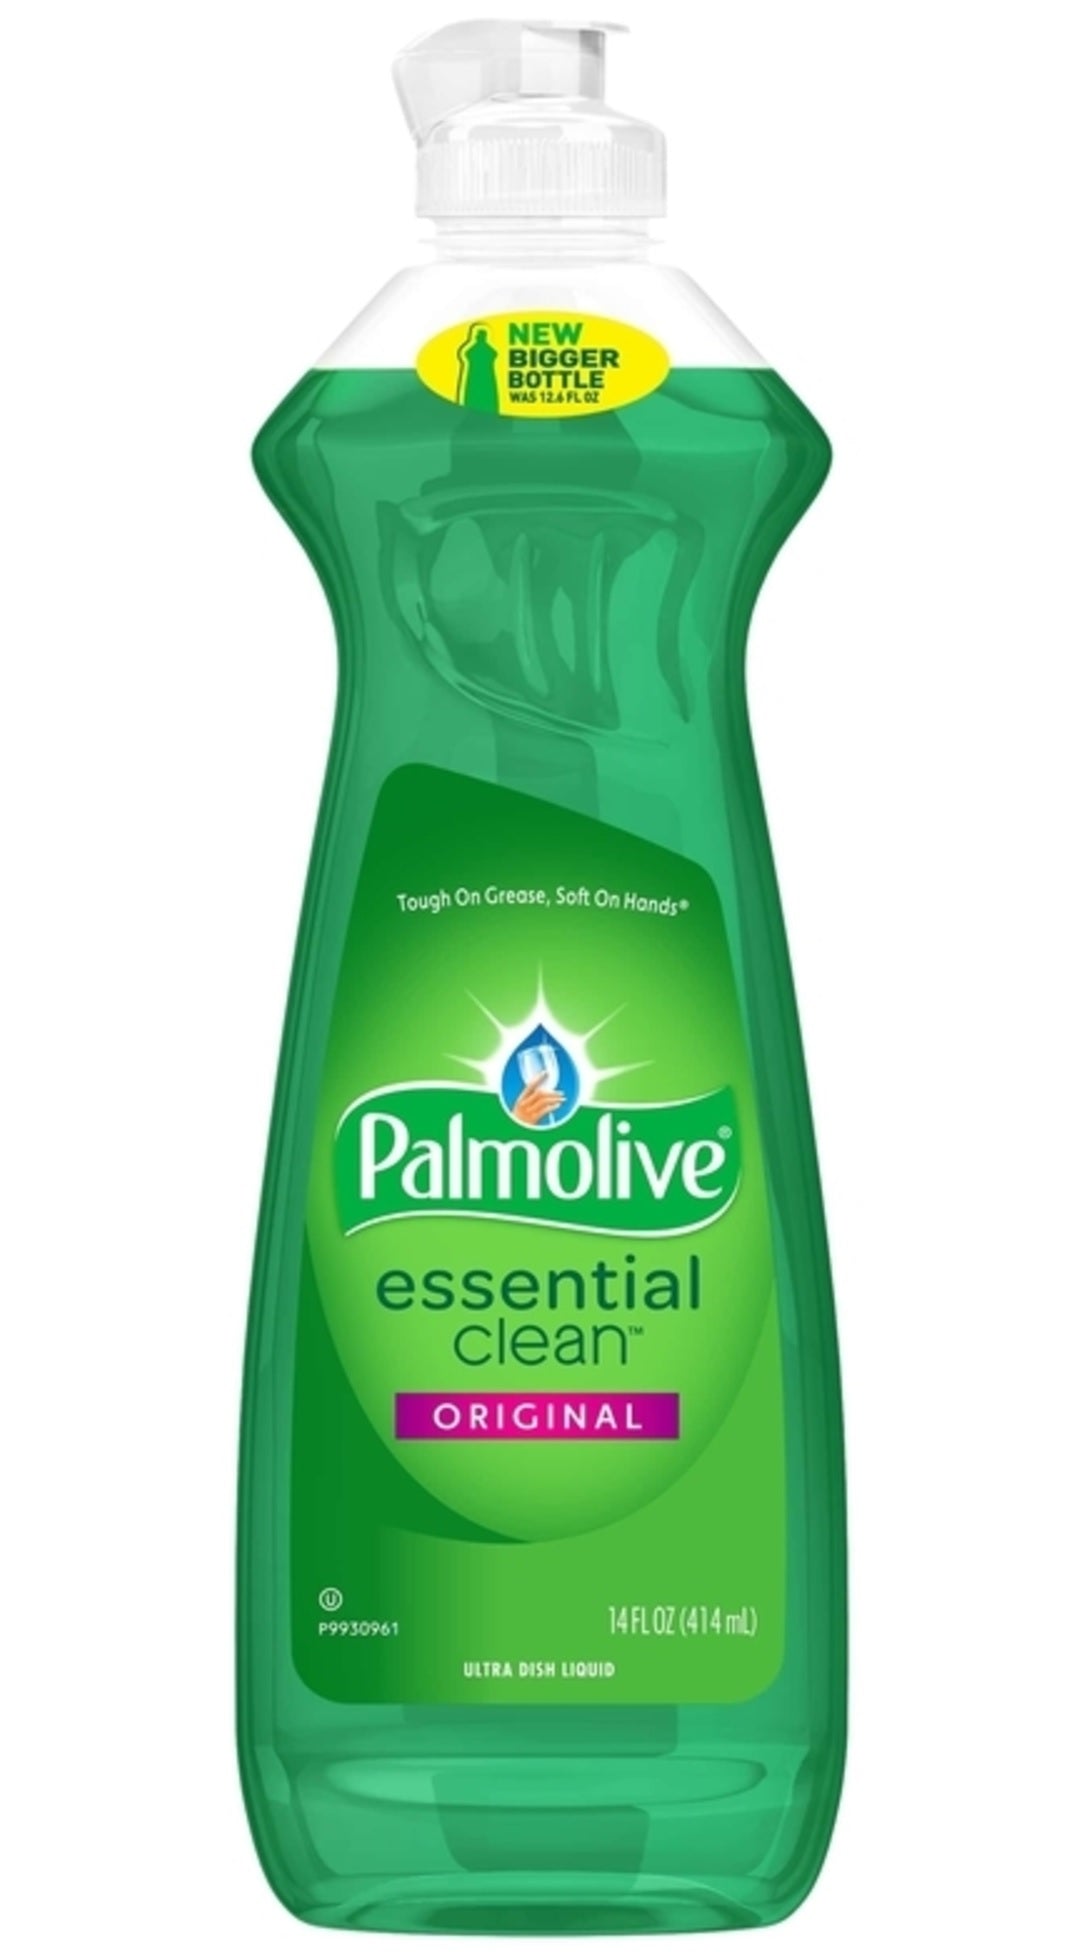 Palmolive US05831A Essential Clean Dish Soap, 14 Oz